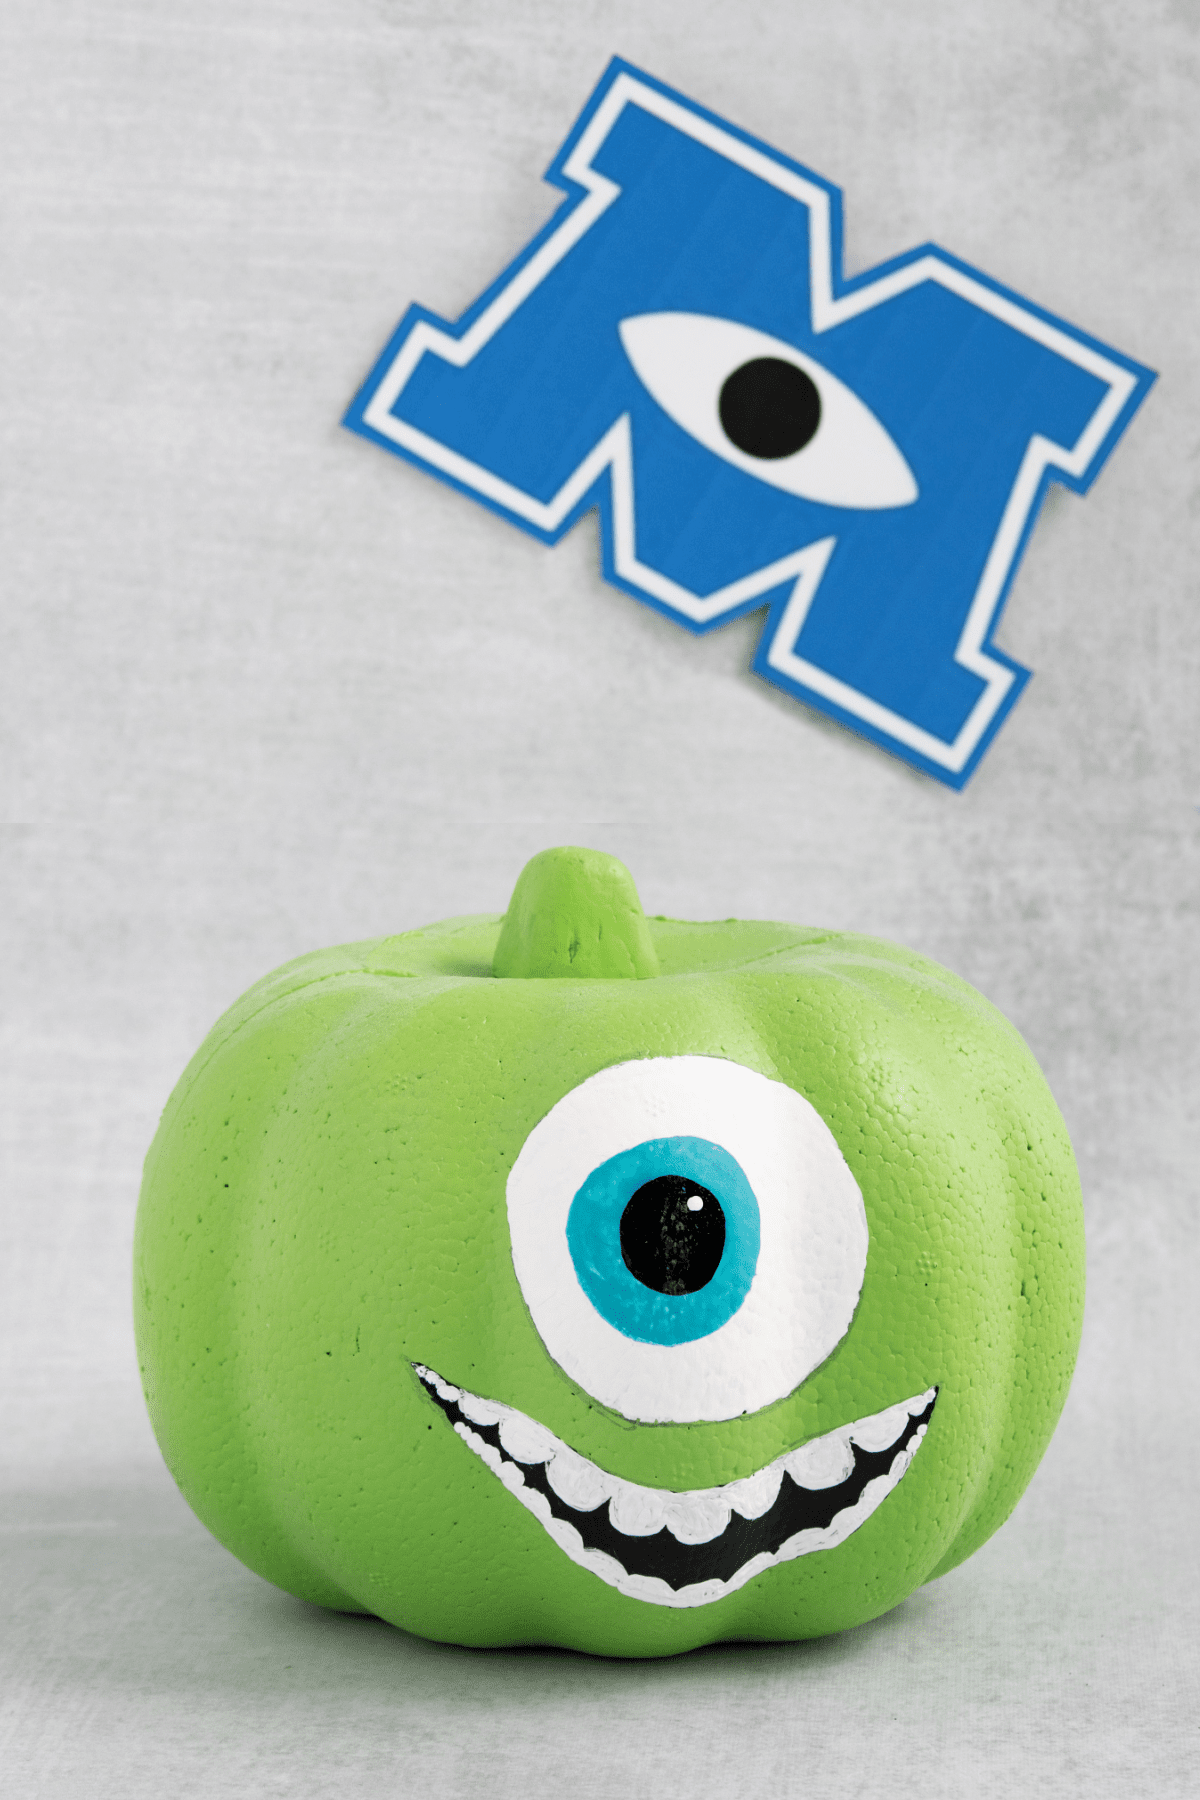 Mike Wazowski pumpkin with Monsters Inc logo